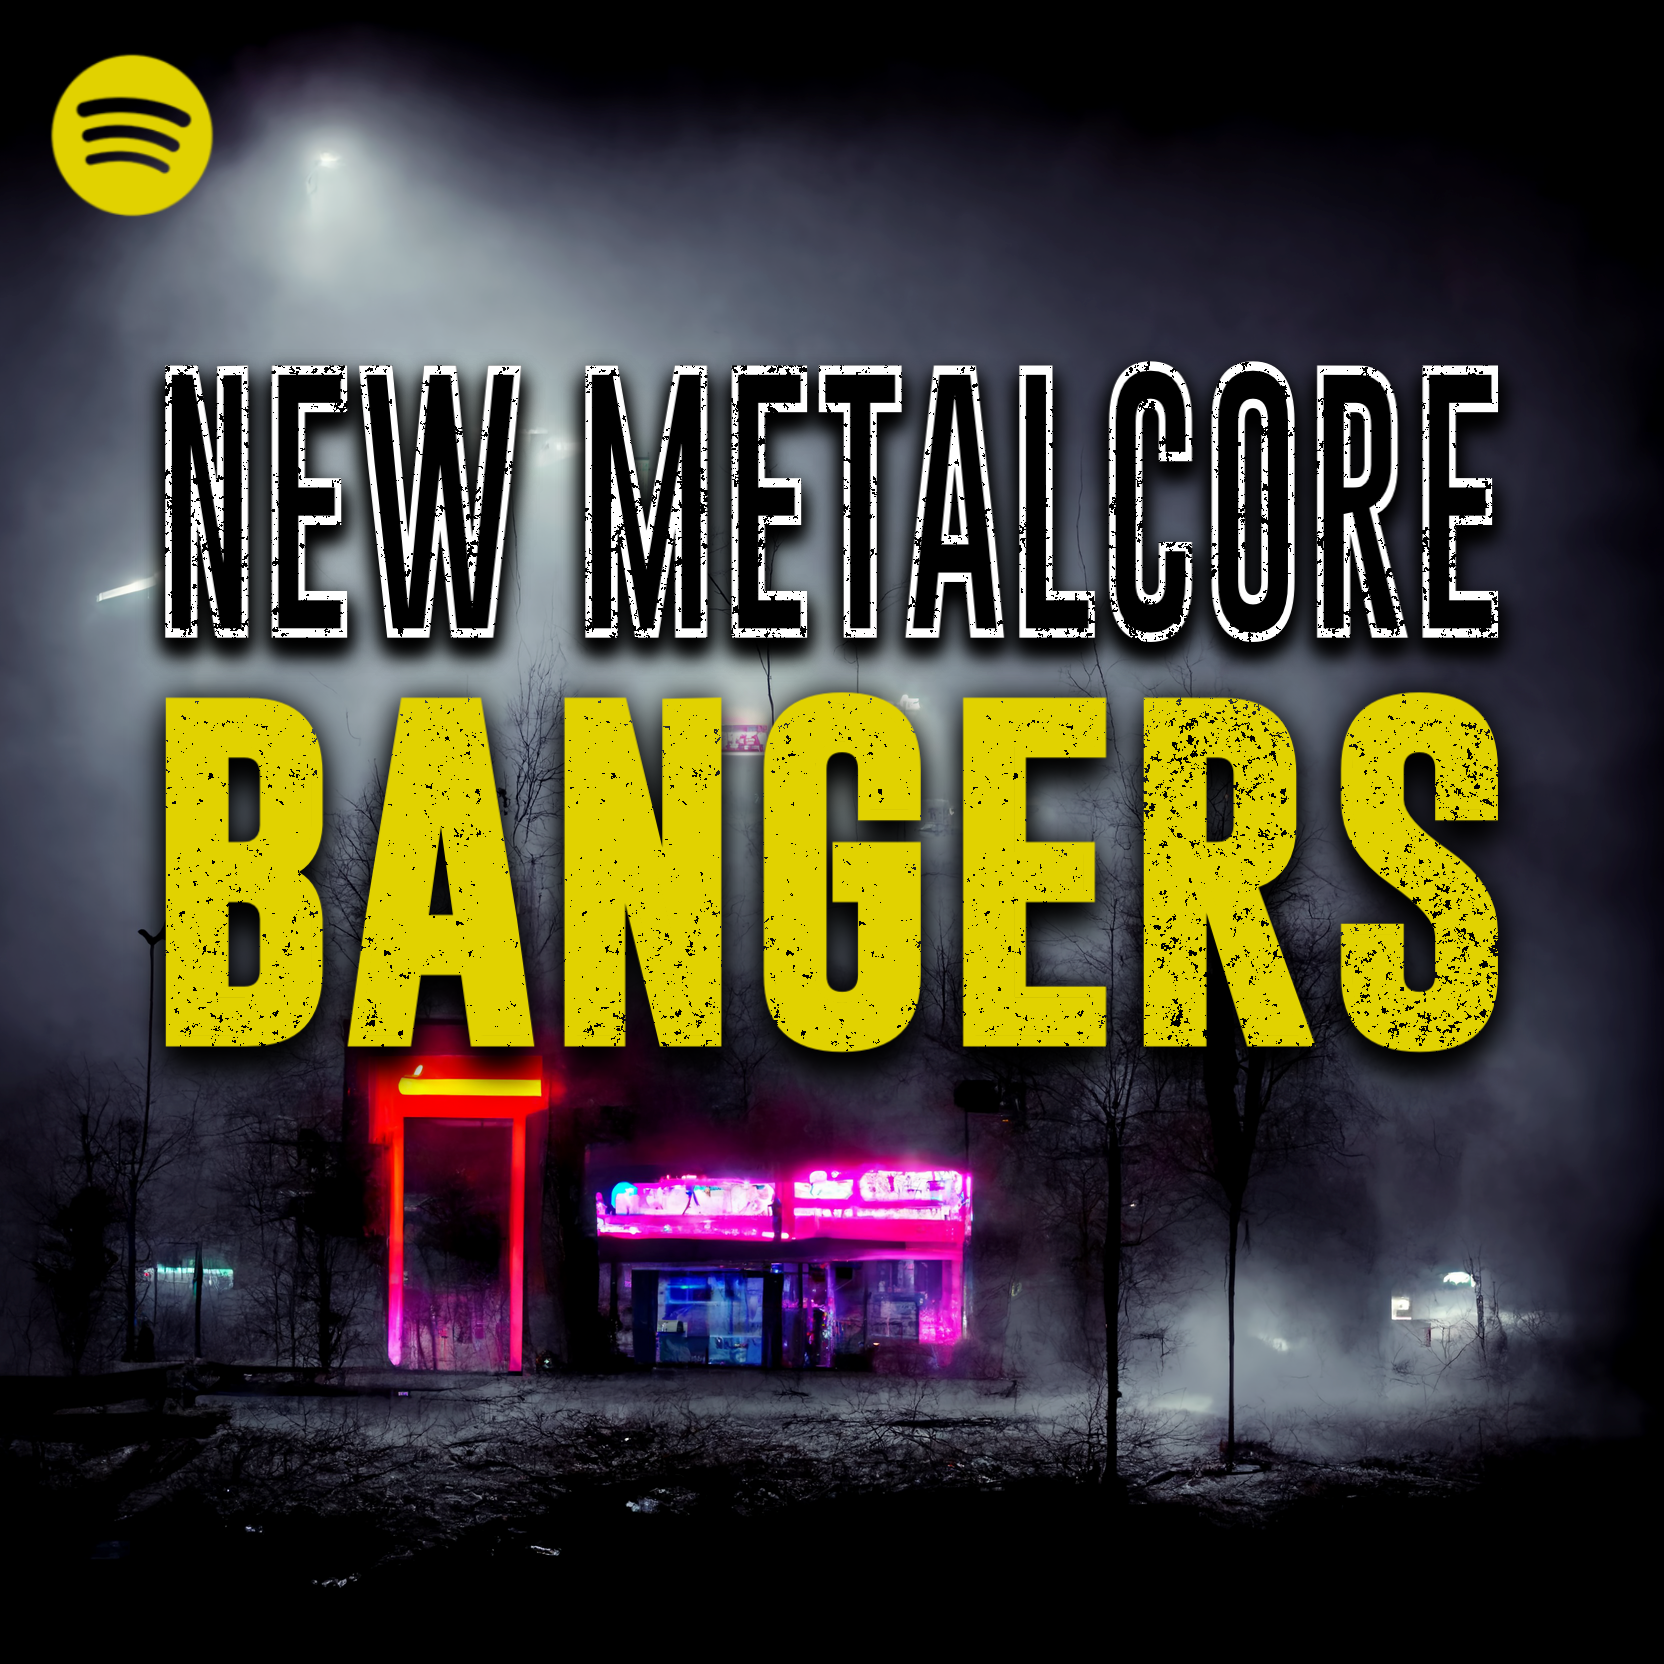 New Metalcore Bangers Playlist